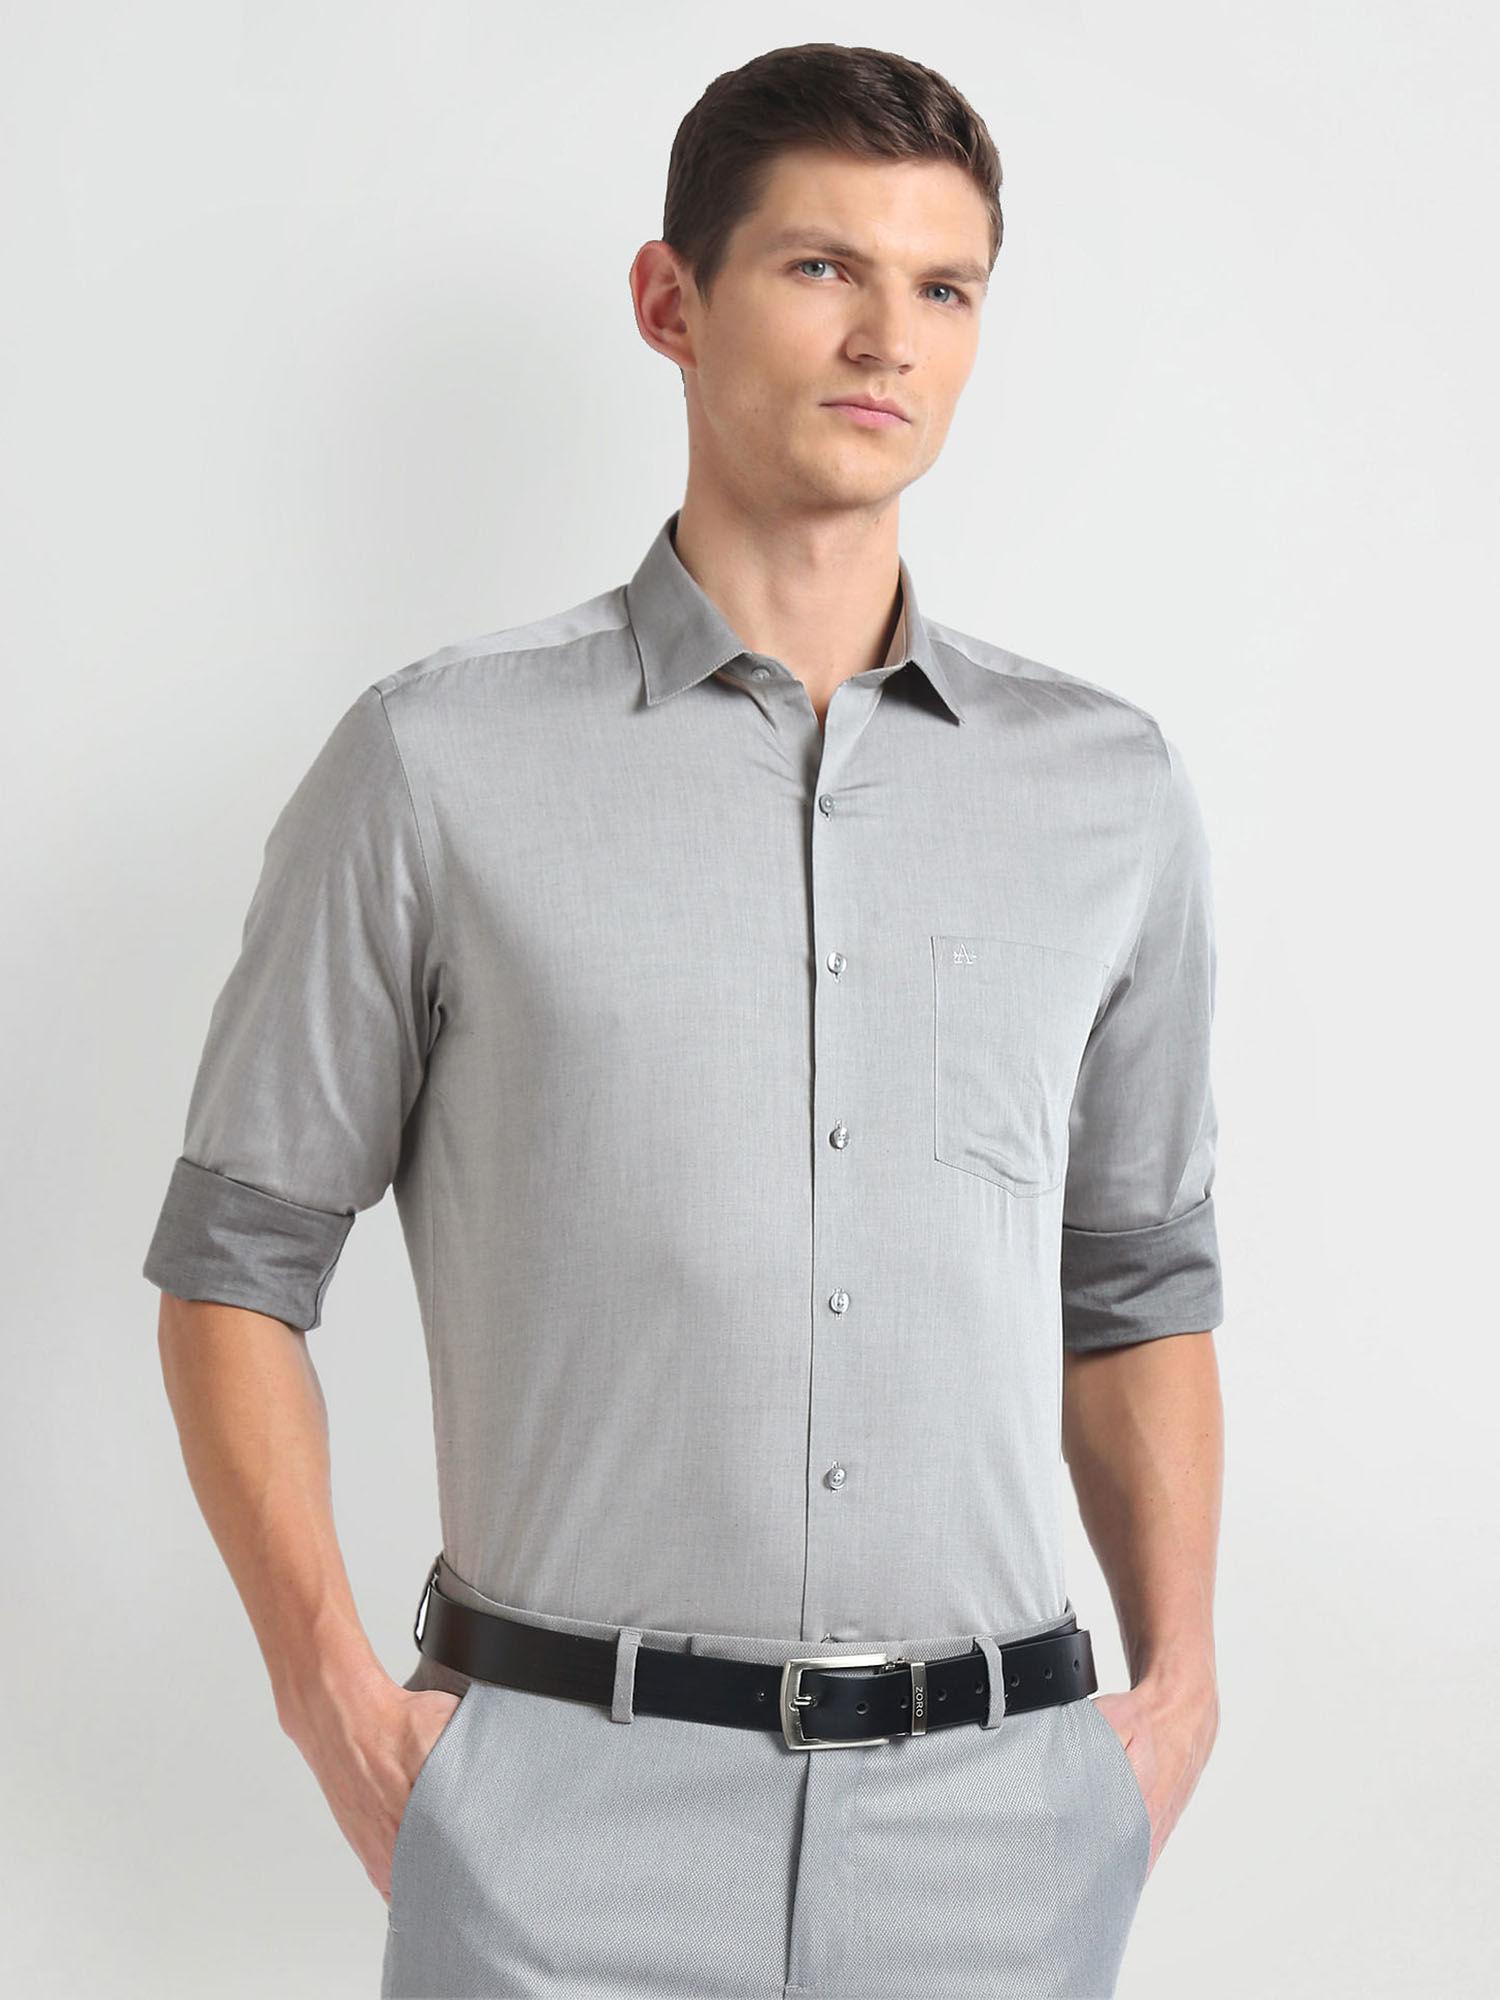 Grey Heathered Twill Formal Shirt